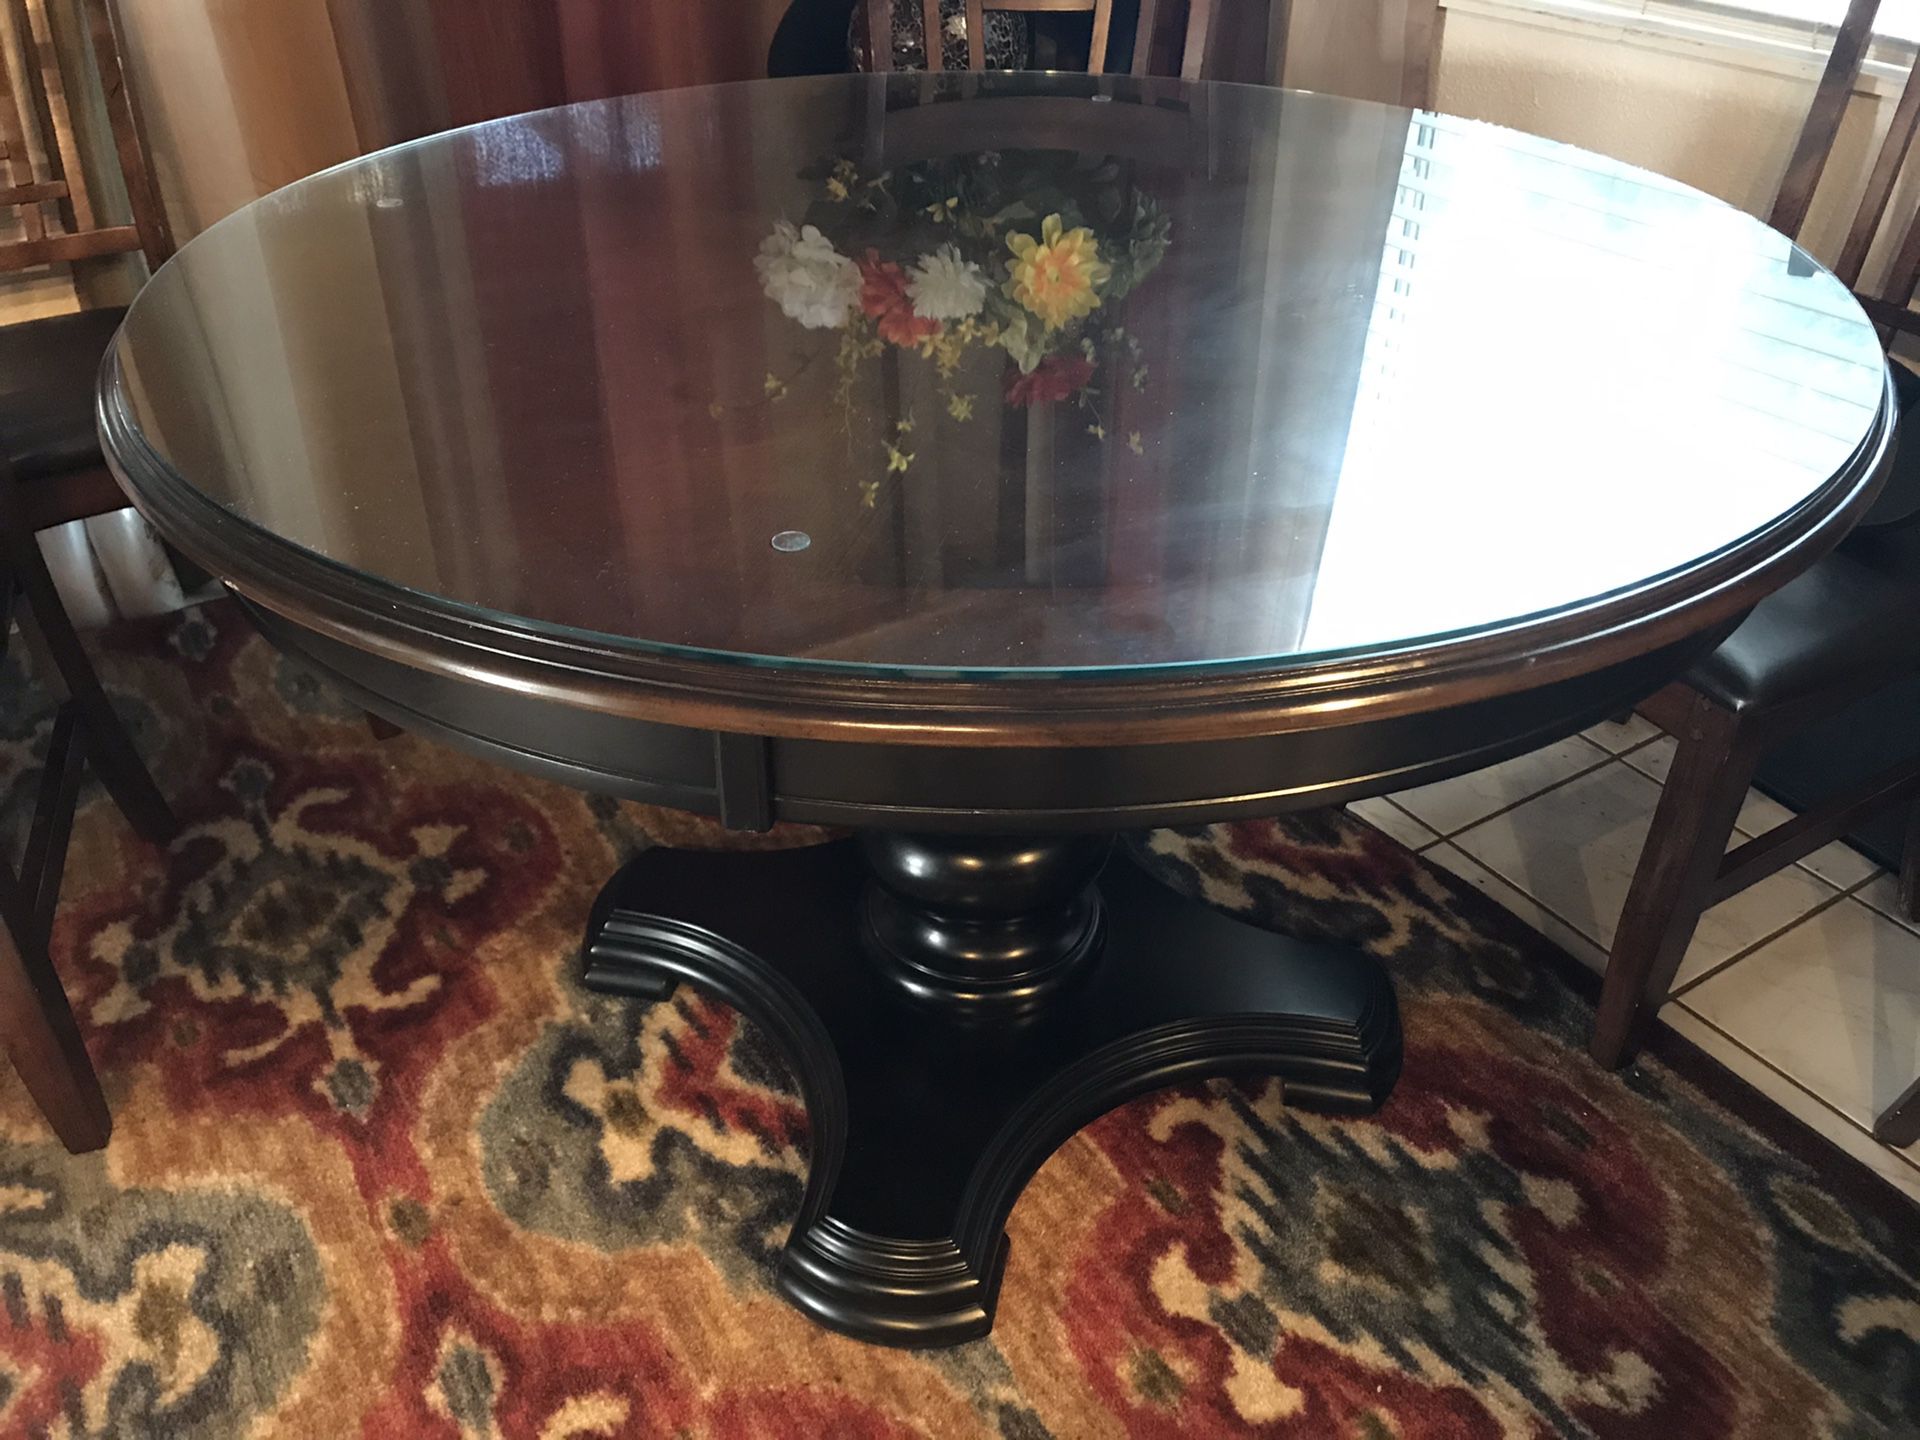 48” diameter round dining table, like new